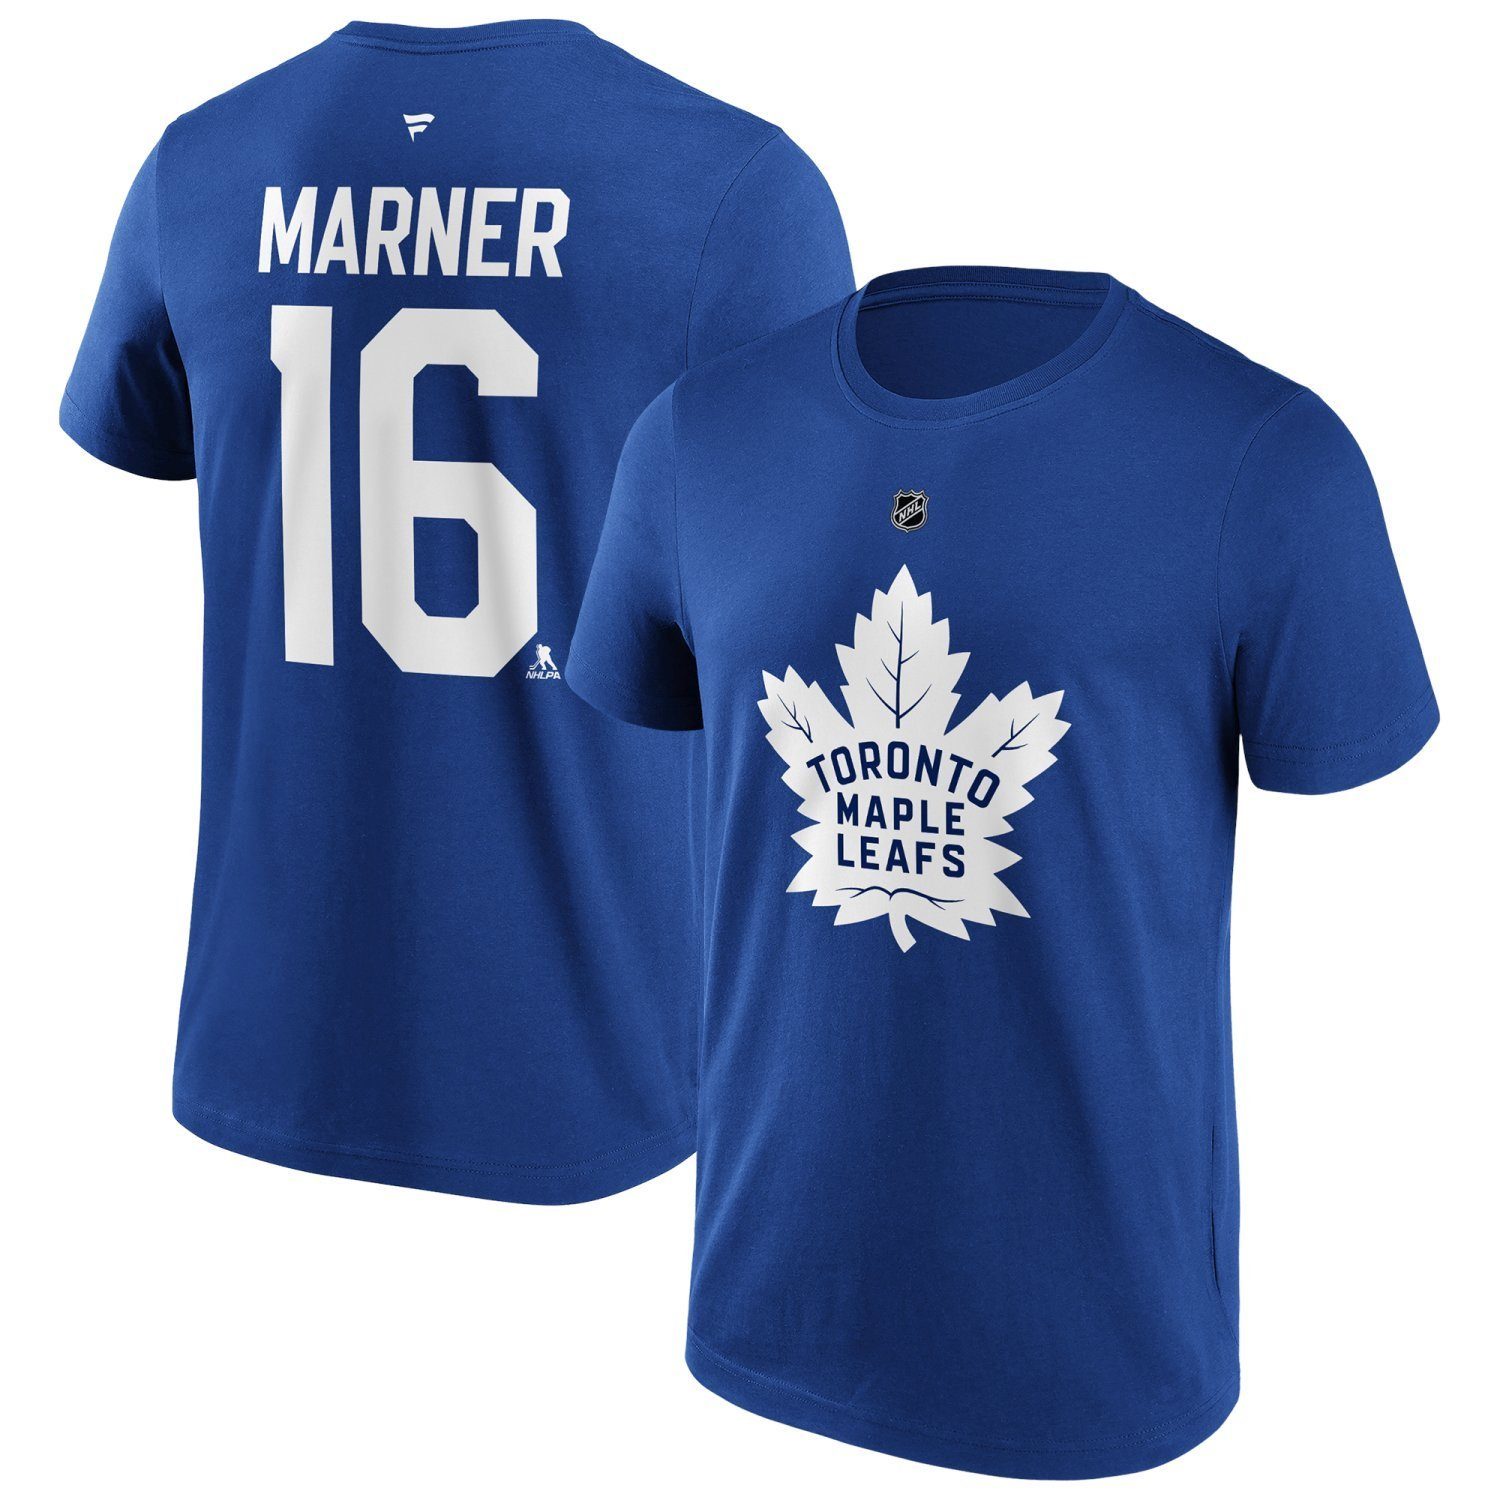 Herren Shirts Fanatics Print-Shirt Toronto Maple Leafs NHL #16 Mitchell Marner